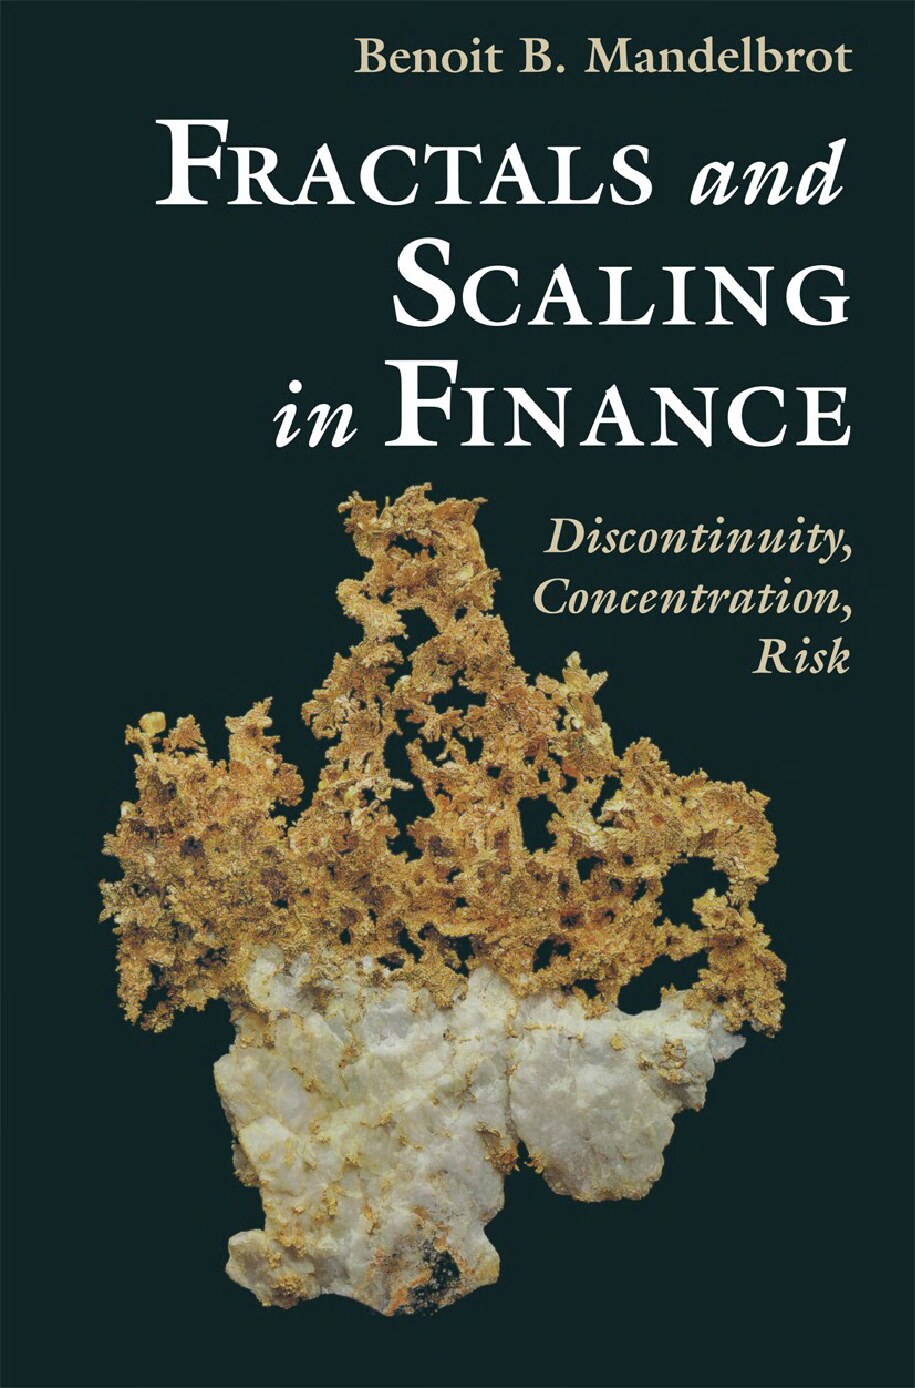 Benoit Mandelbrot - Fractals and Scaling in Finance